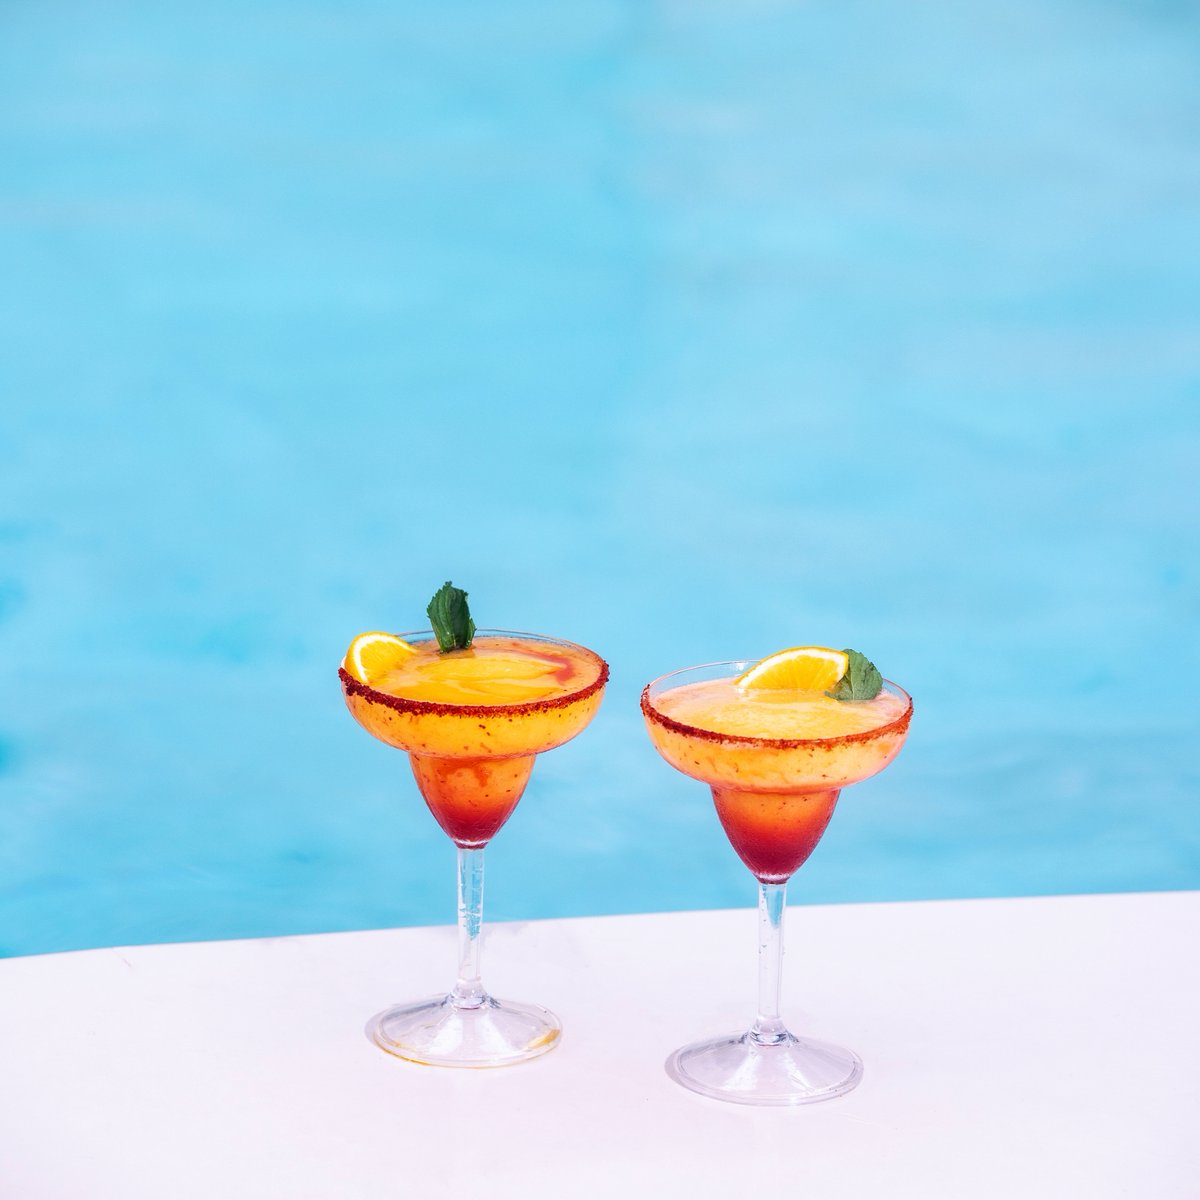 Enjoy this tasty cocktail at our Lively #SwimUpBar. 🍸⁠
___⁠
Disfruta de este delicioso coctel en nuestro Cheef Swim up bar.⁠
⁠
#MajesticElegance #MajesticResortsCostaMujeres #MajesticResorts #cocktail #mixology